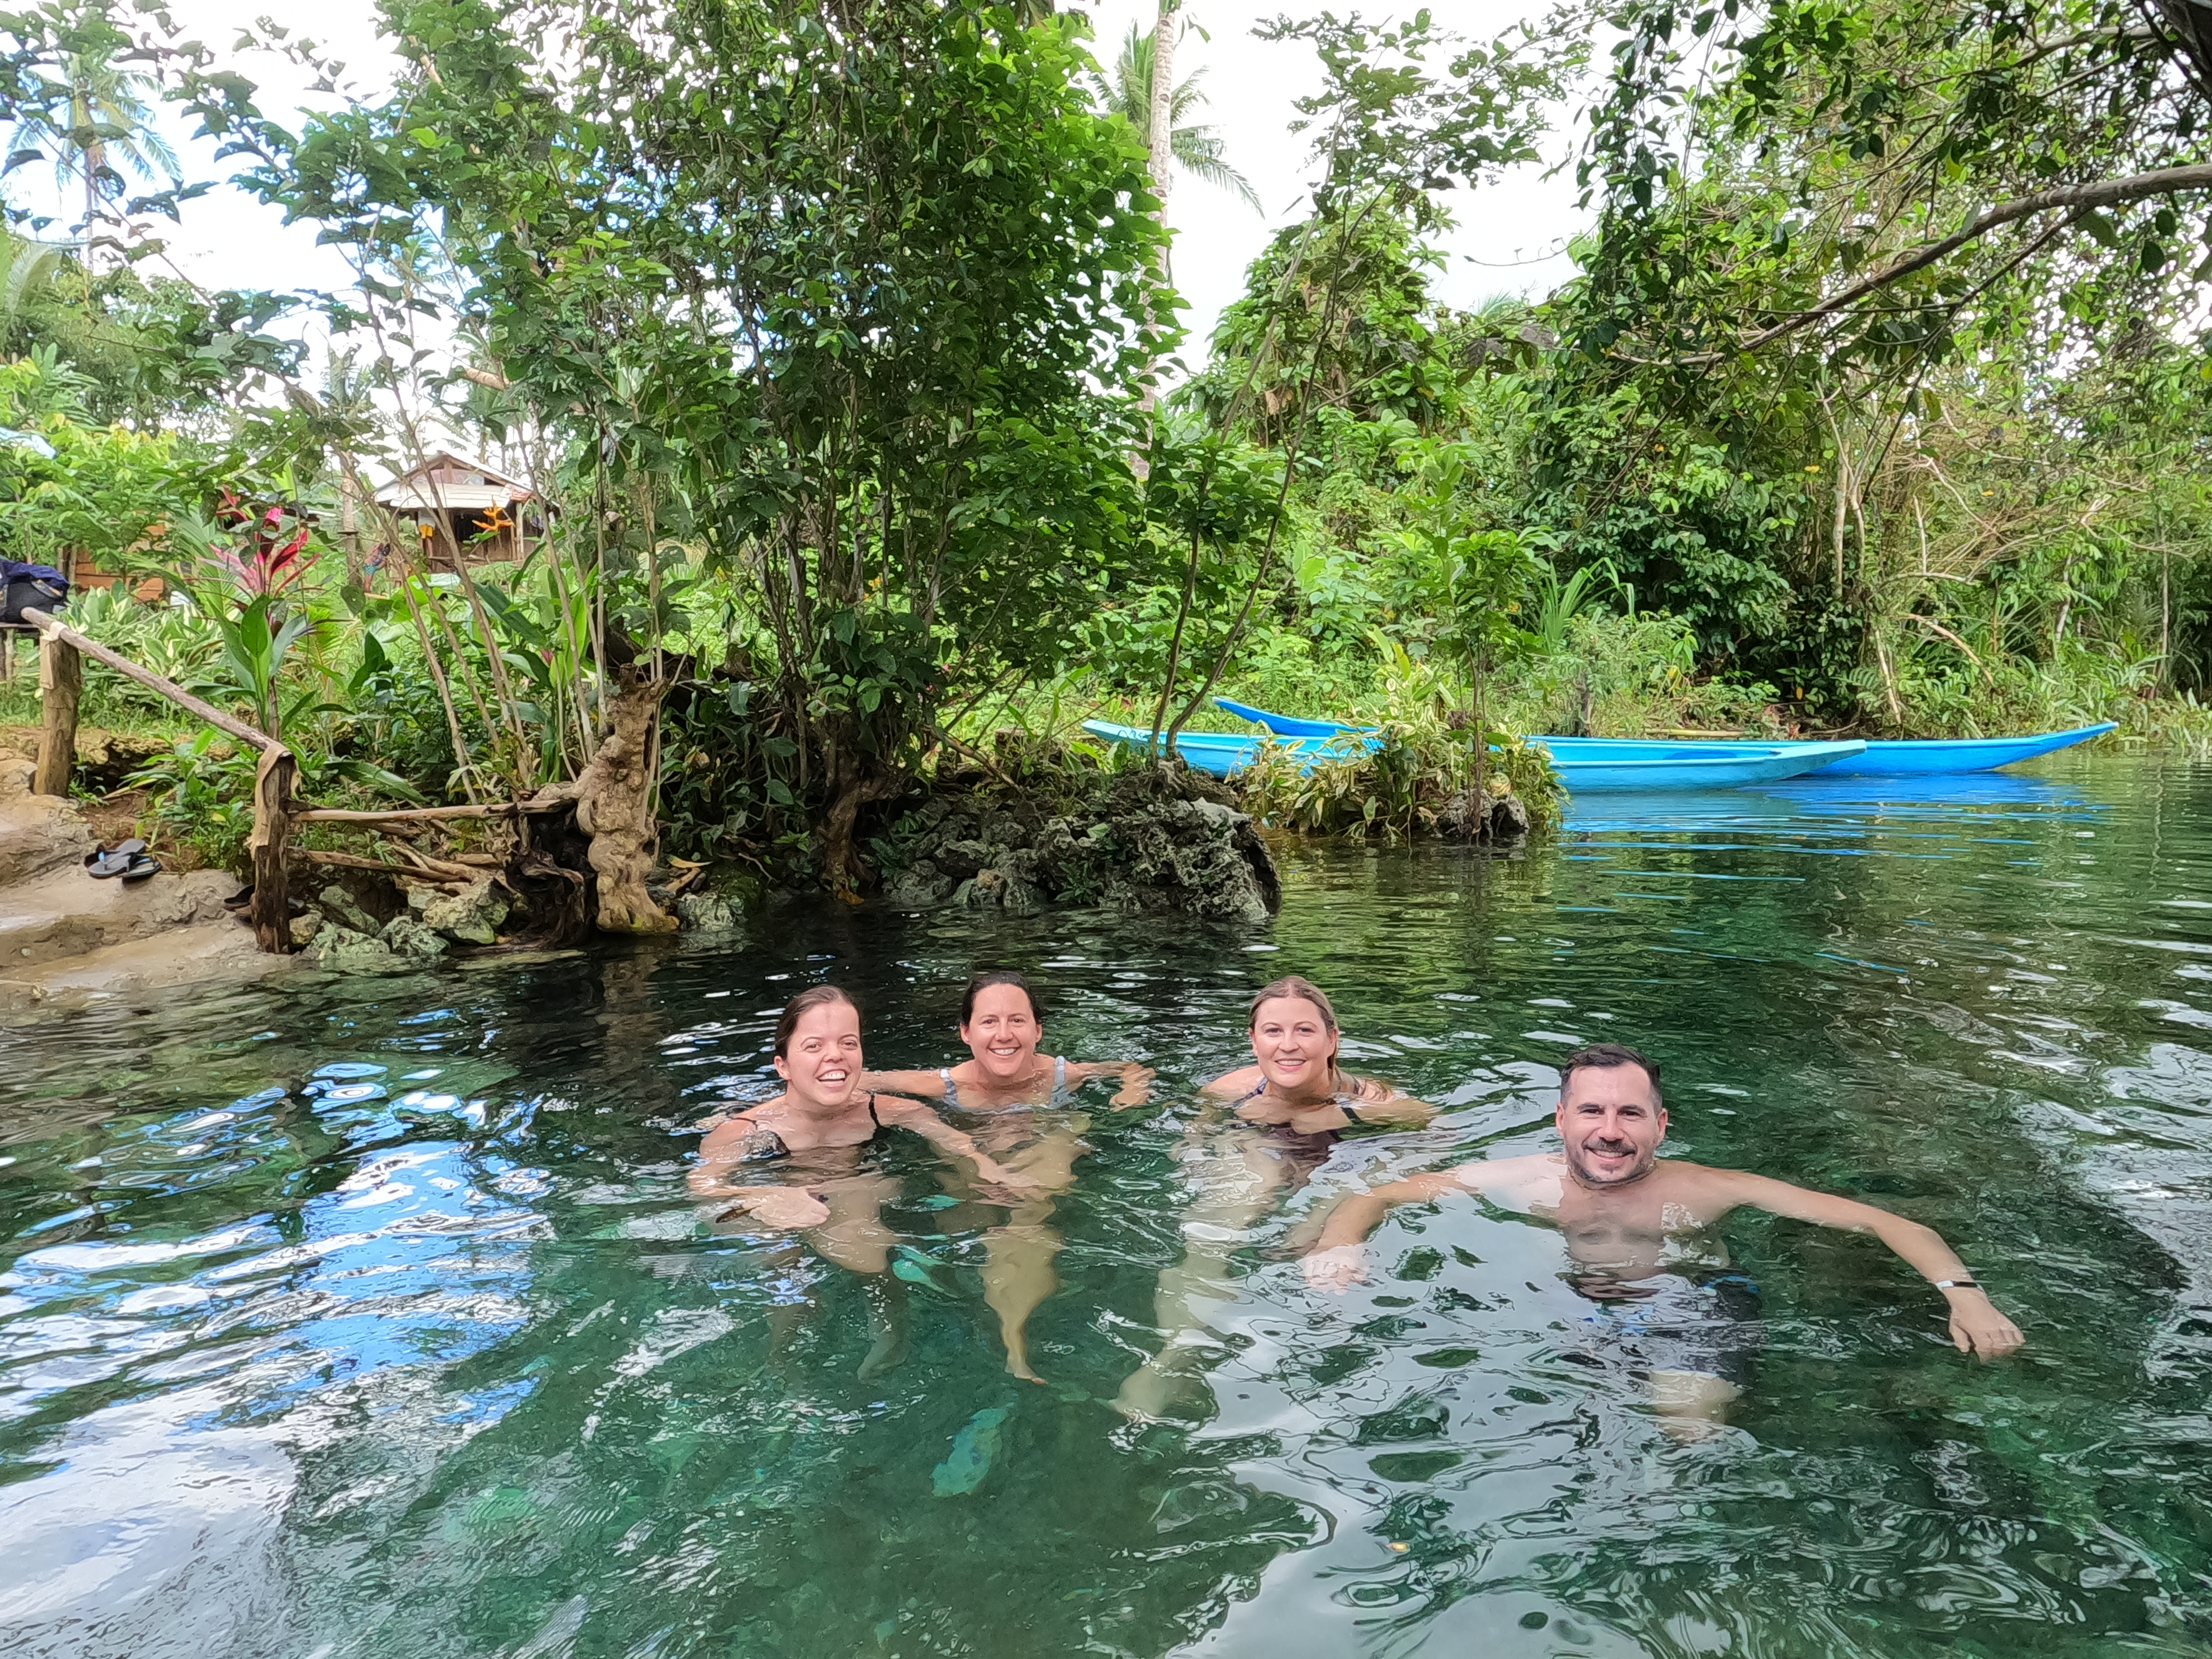 Taylor Shepherd, Rhiana Ravindran, Lauren Higgins and Rhys Sain in the secret pool at the end of Maasin River, Siargao, Philippines